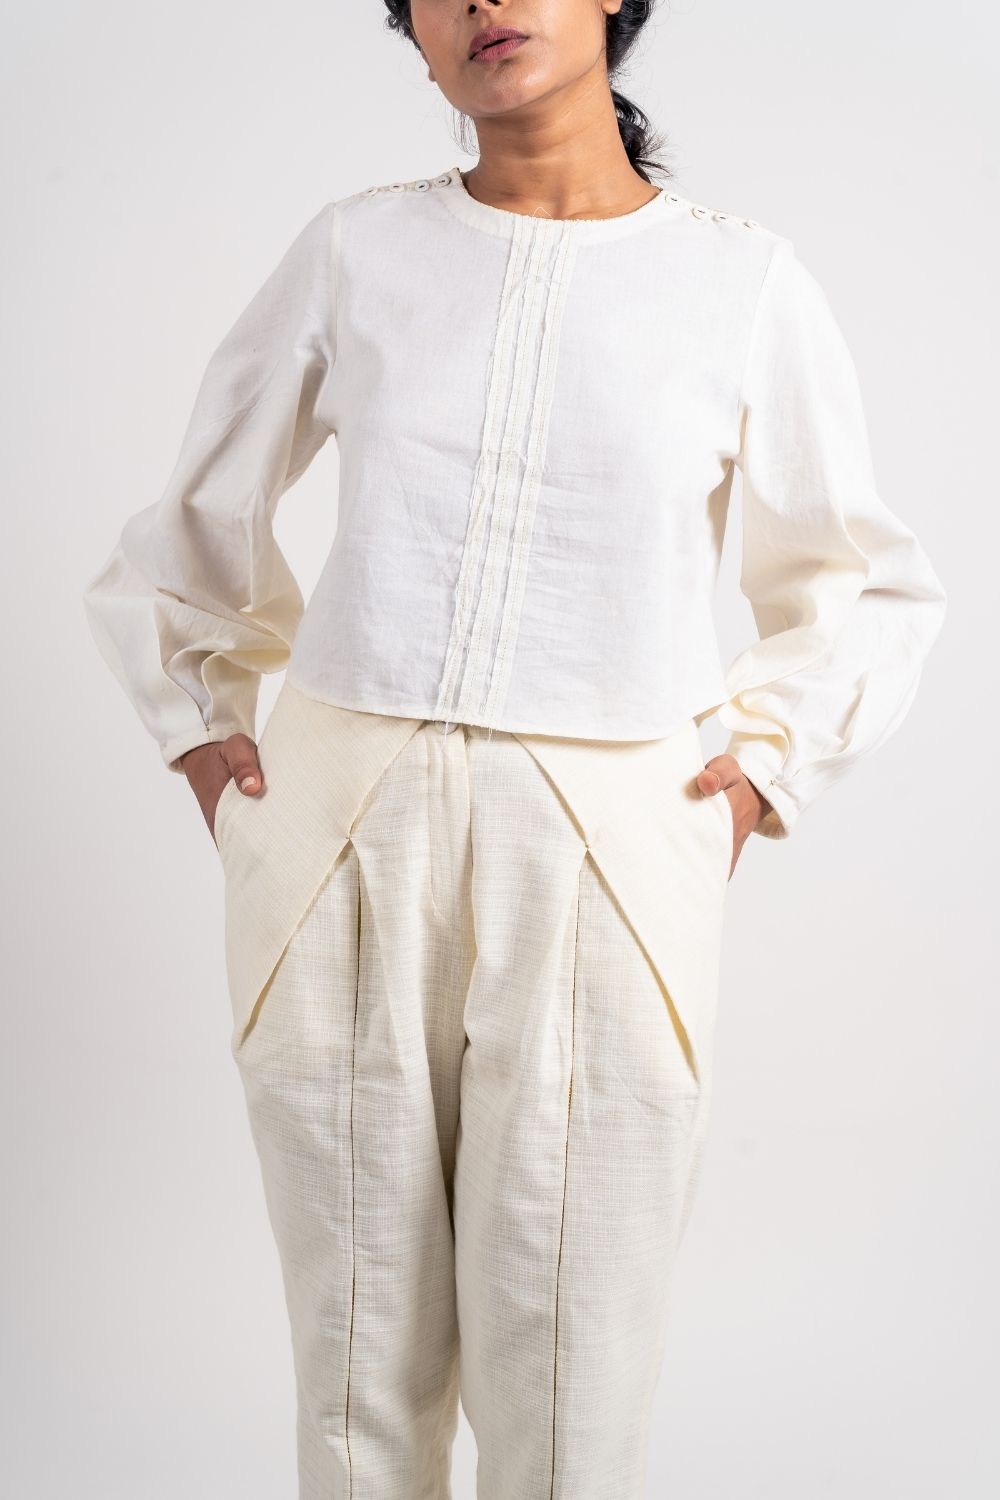 White Cotton Tunic Top Tops Handloom Cotton, Natural, Regular Fit, Solids, Tops, Ahmev Kamakhyaa